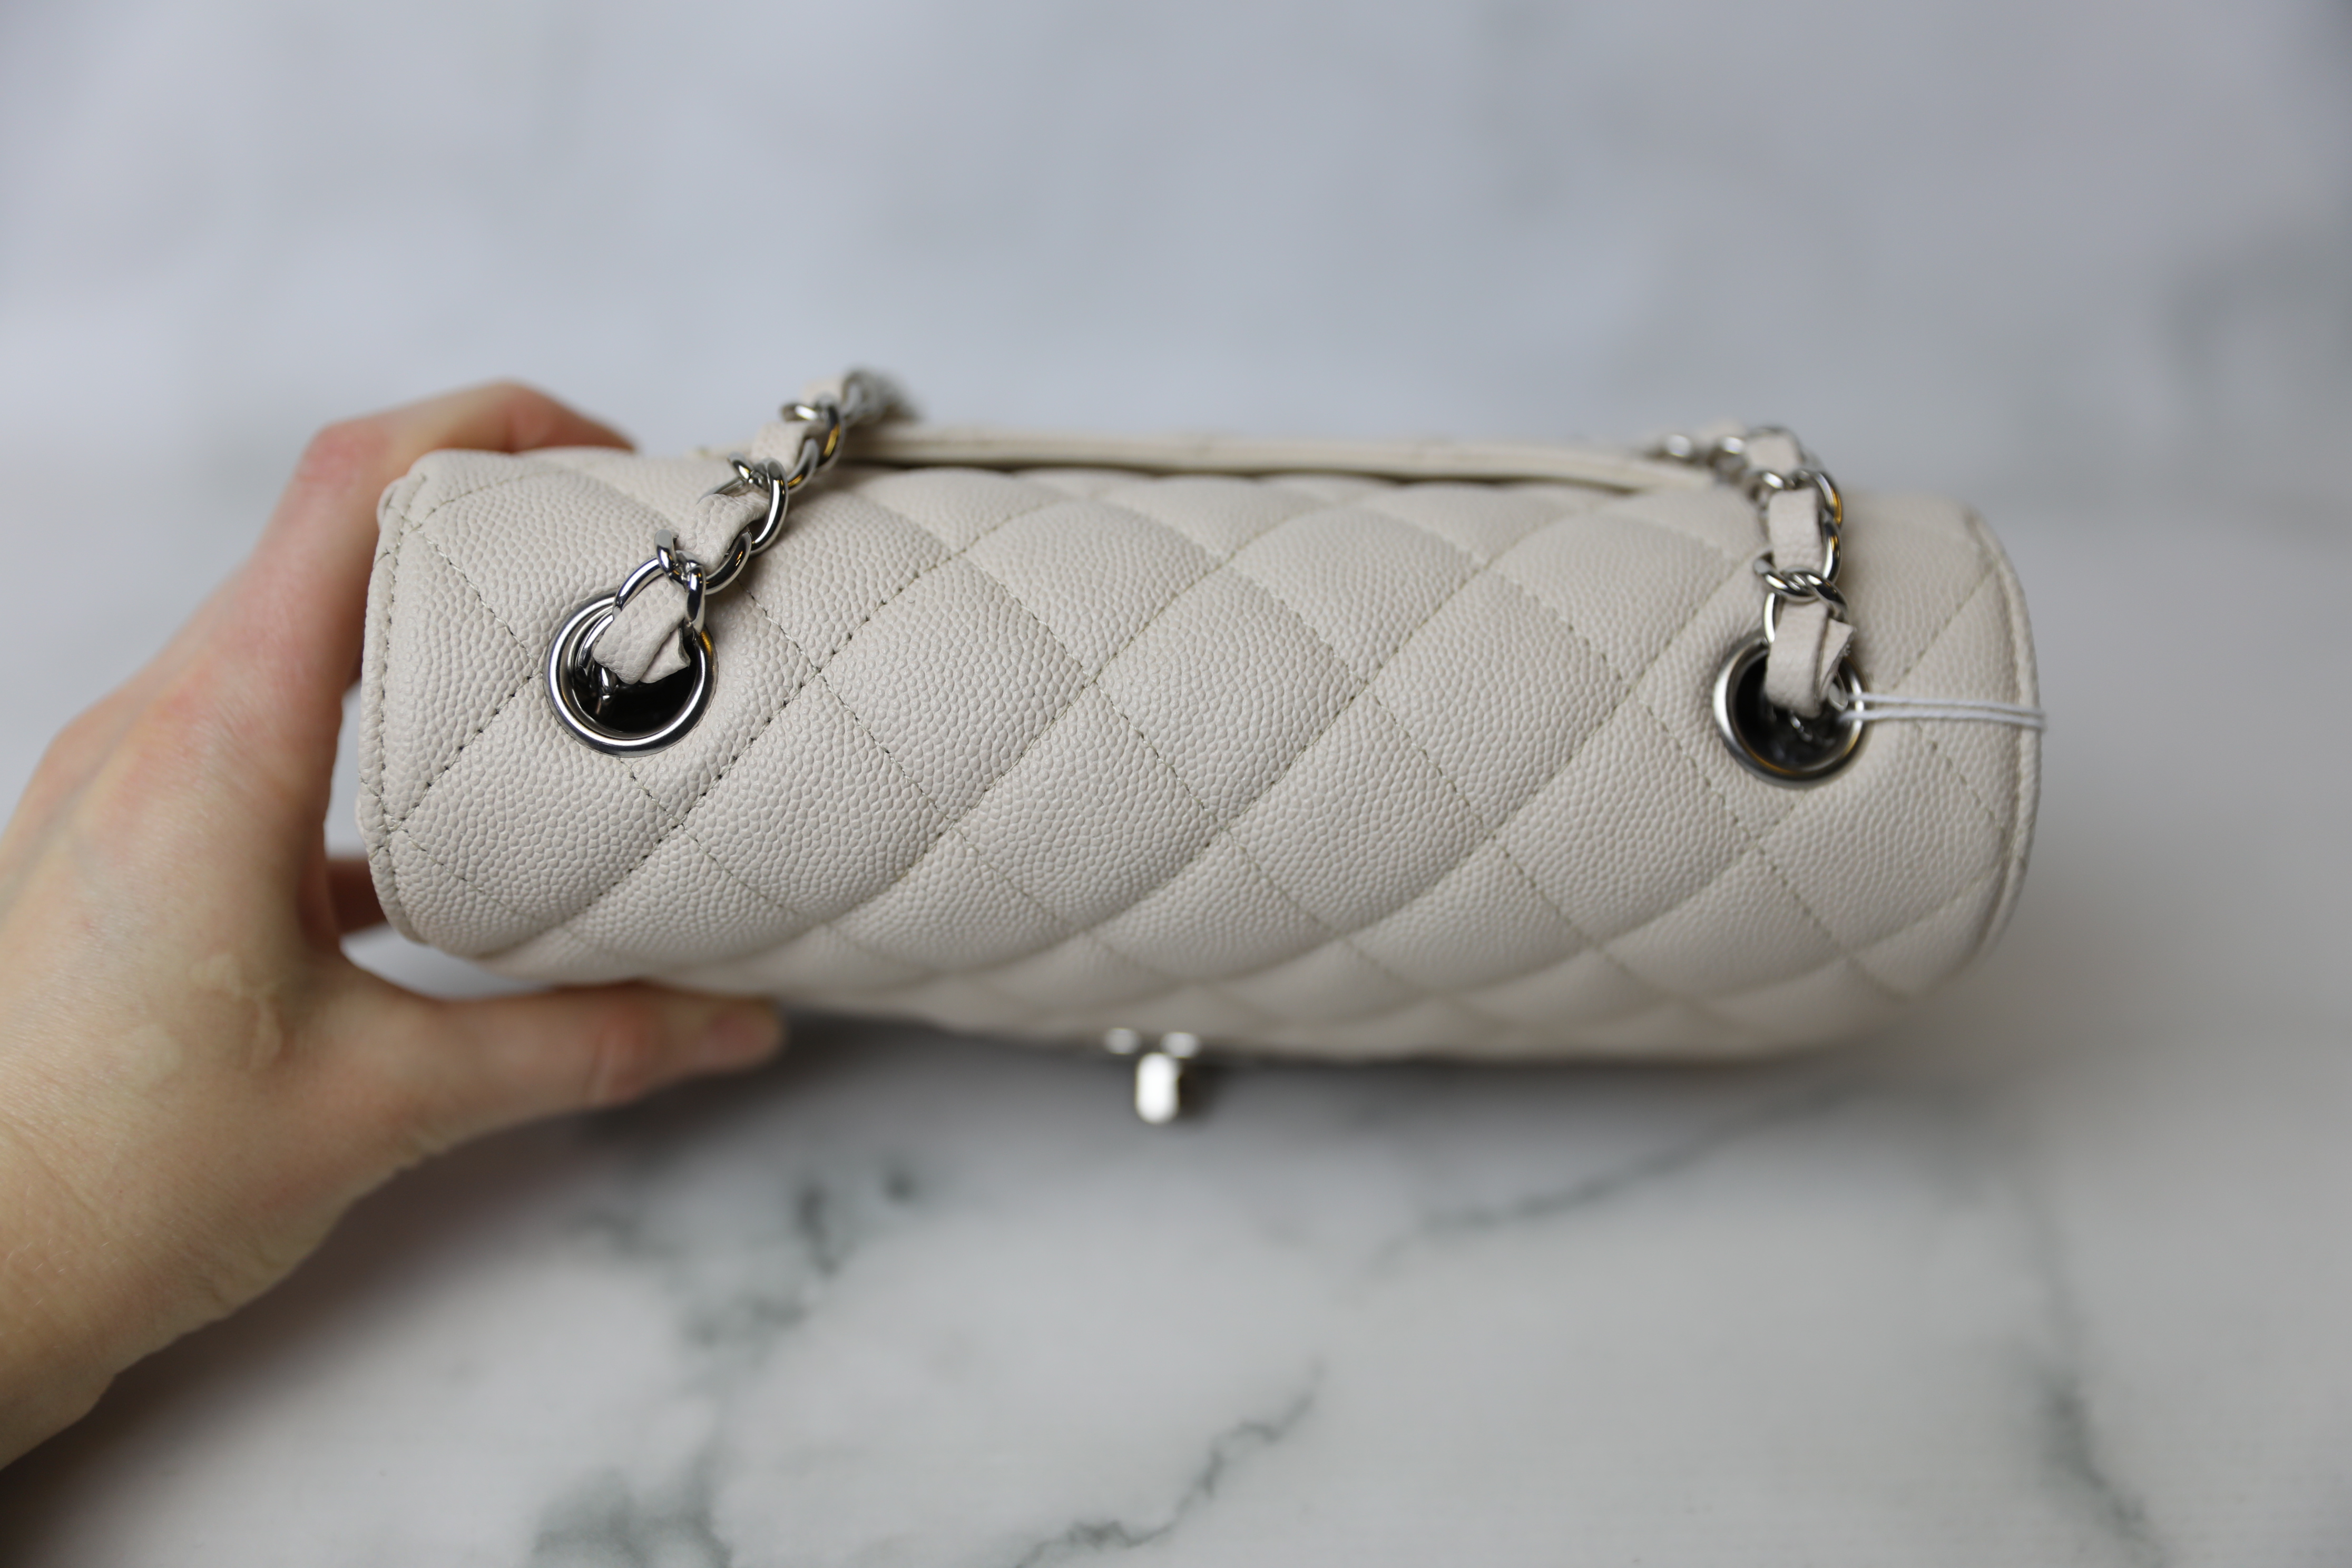 Beige Chanel Reissue Caviar Chain Tote Bag – Designer Revival